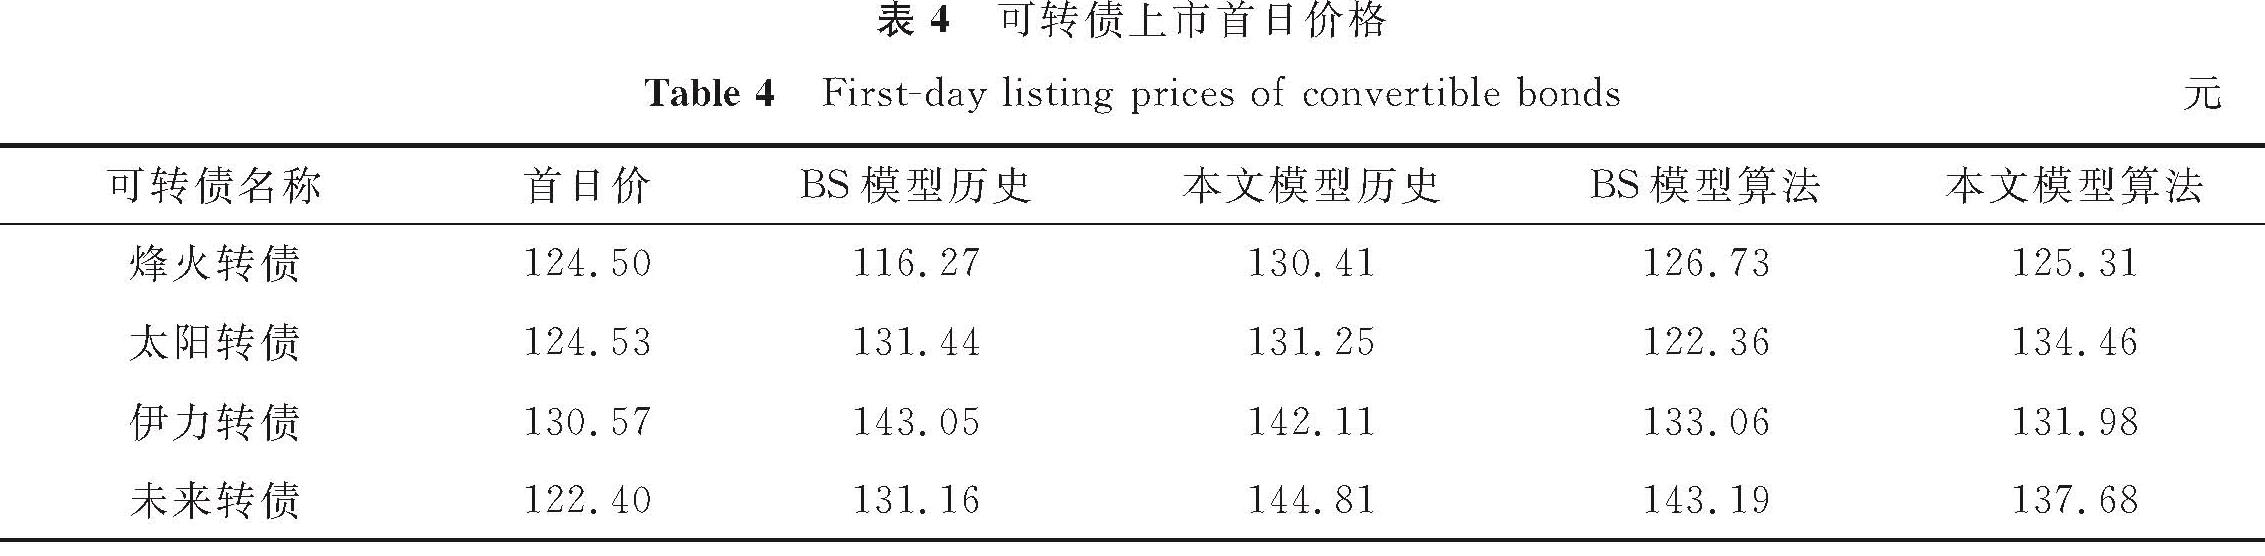 表4 可转债上市首日价格<br/>Table 4 First-day listing prices of convertible bonds元